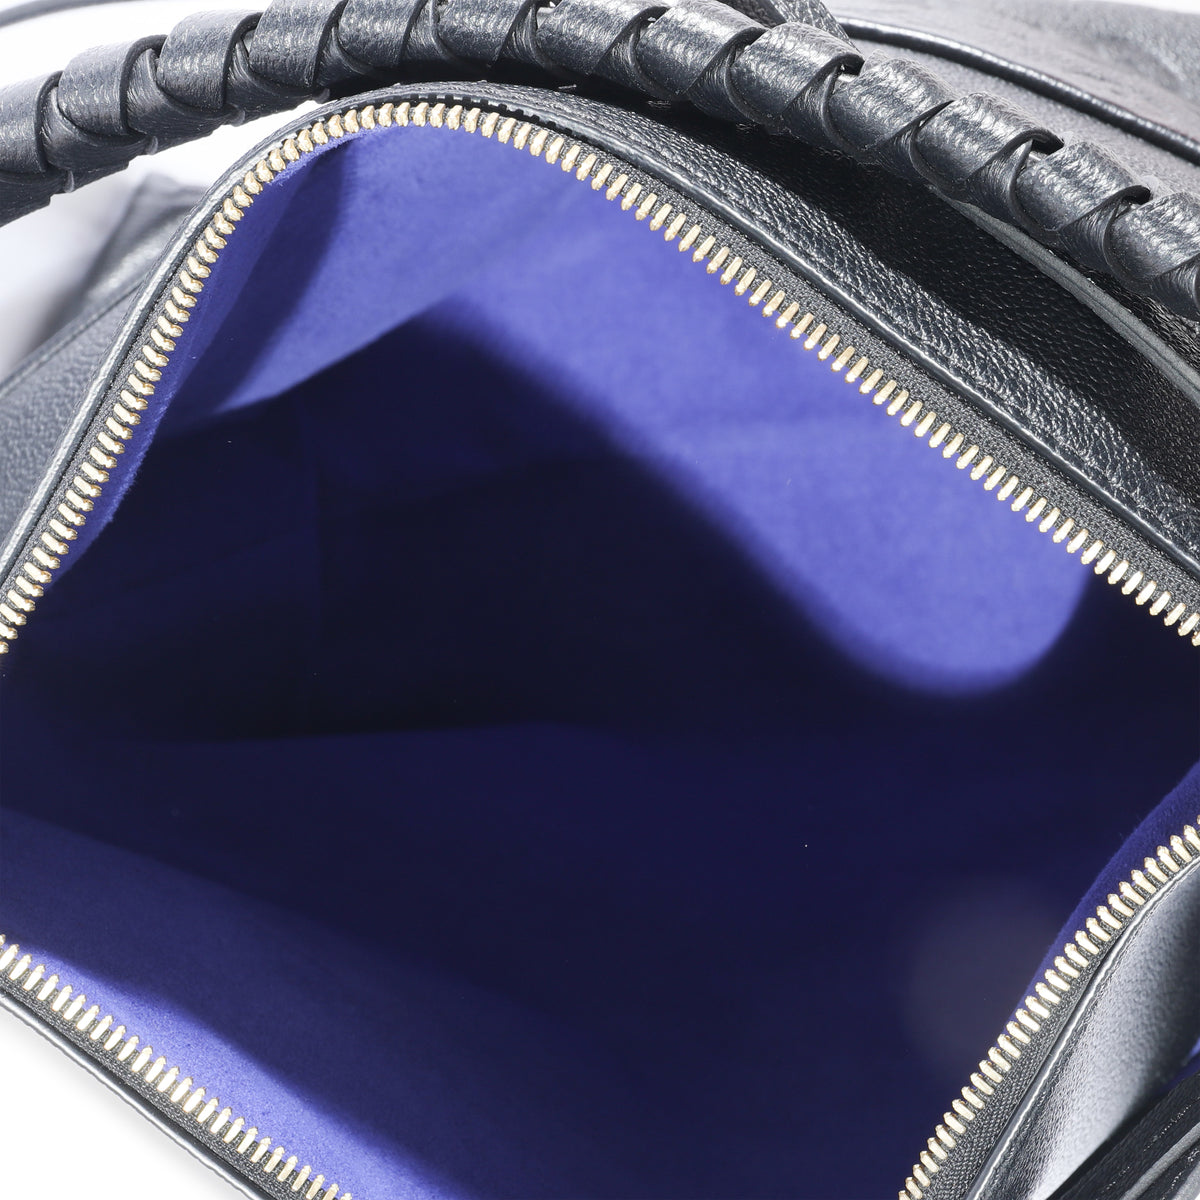 Louis Vuitton Monogram Empreinte Leather Maida Hobo - Oh My Handbags